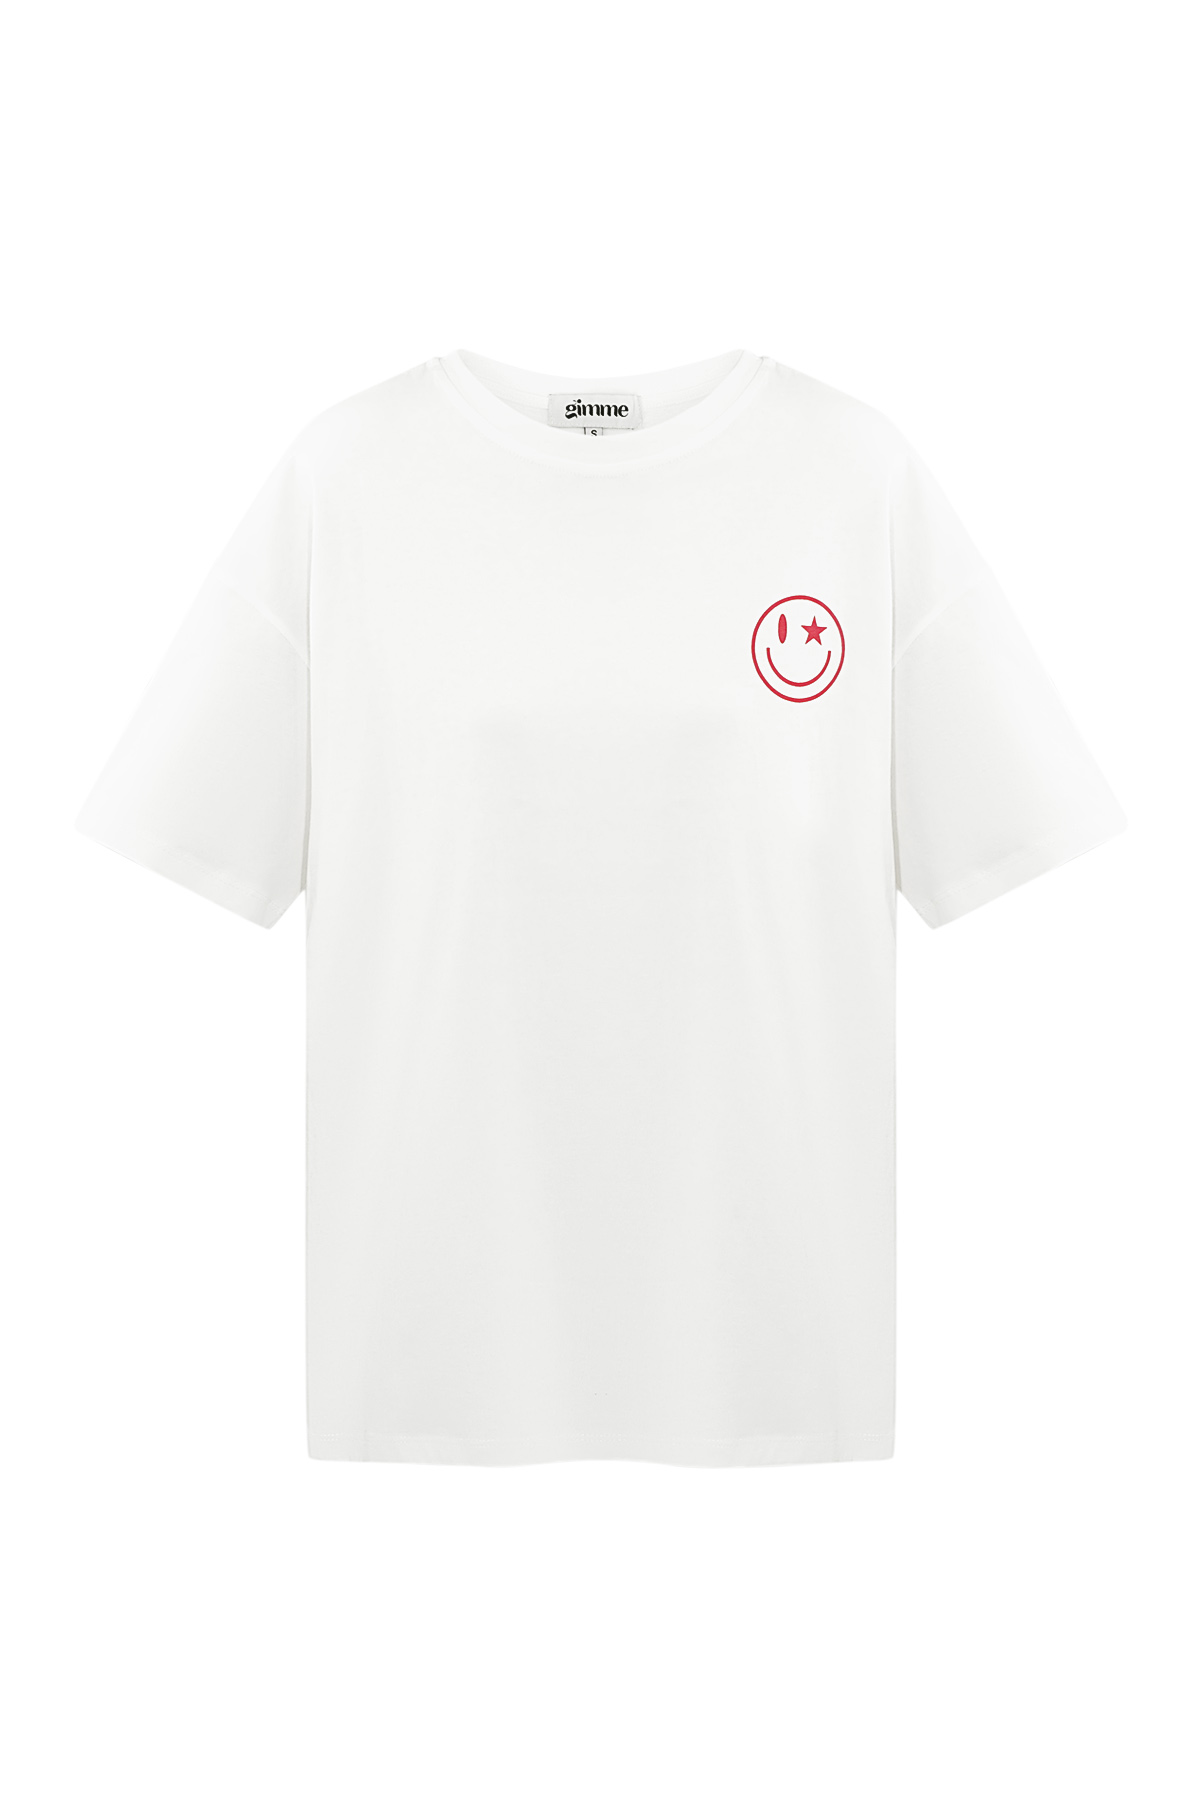 T-shirt smiley vie heureuse - blanc h5 